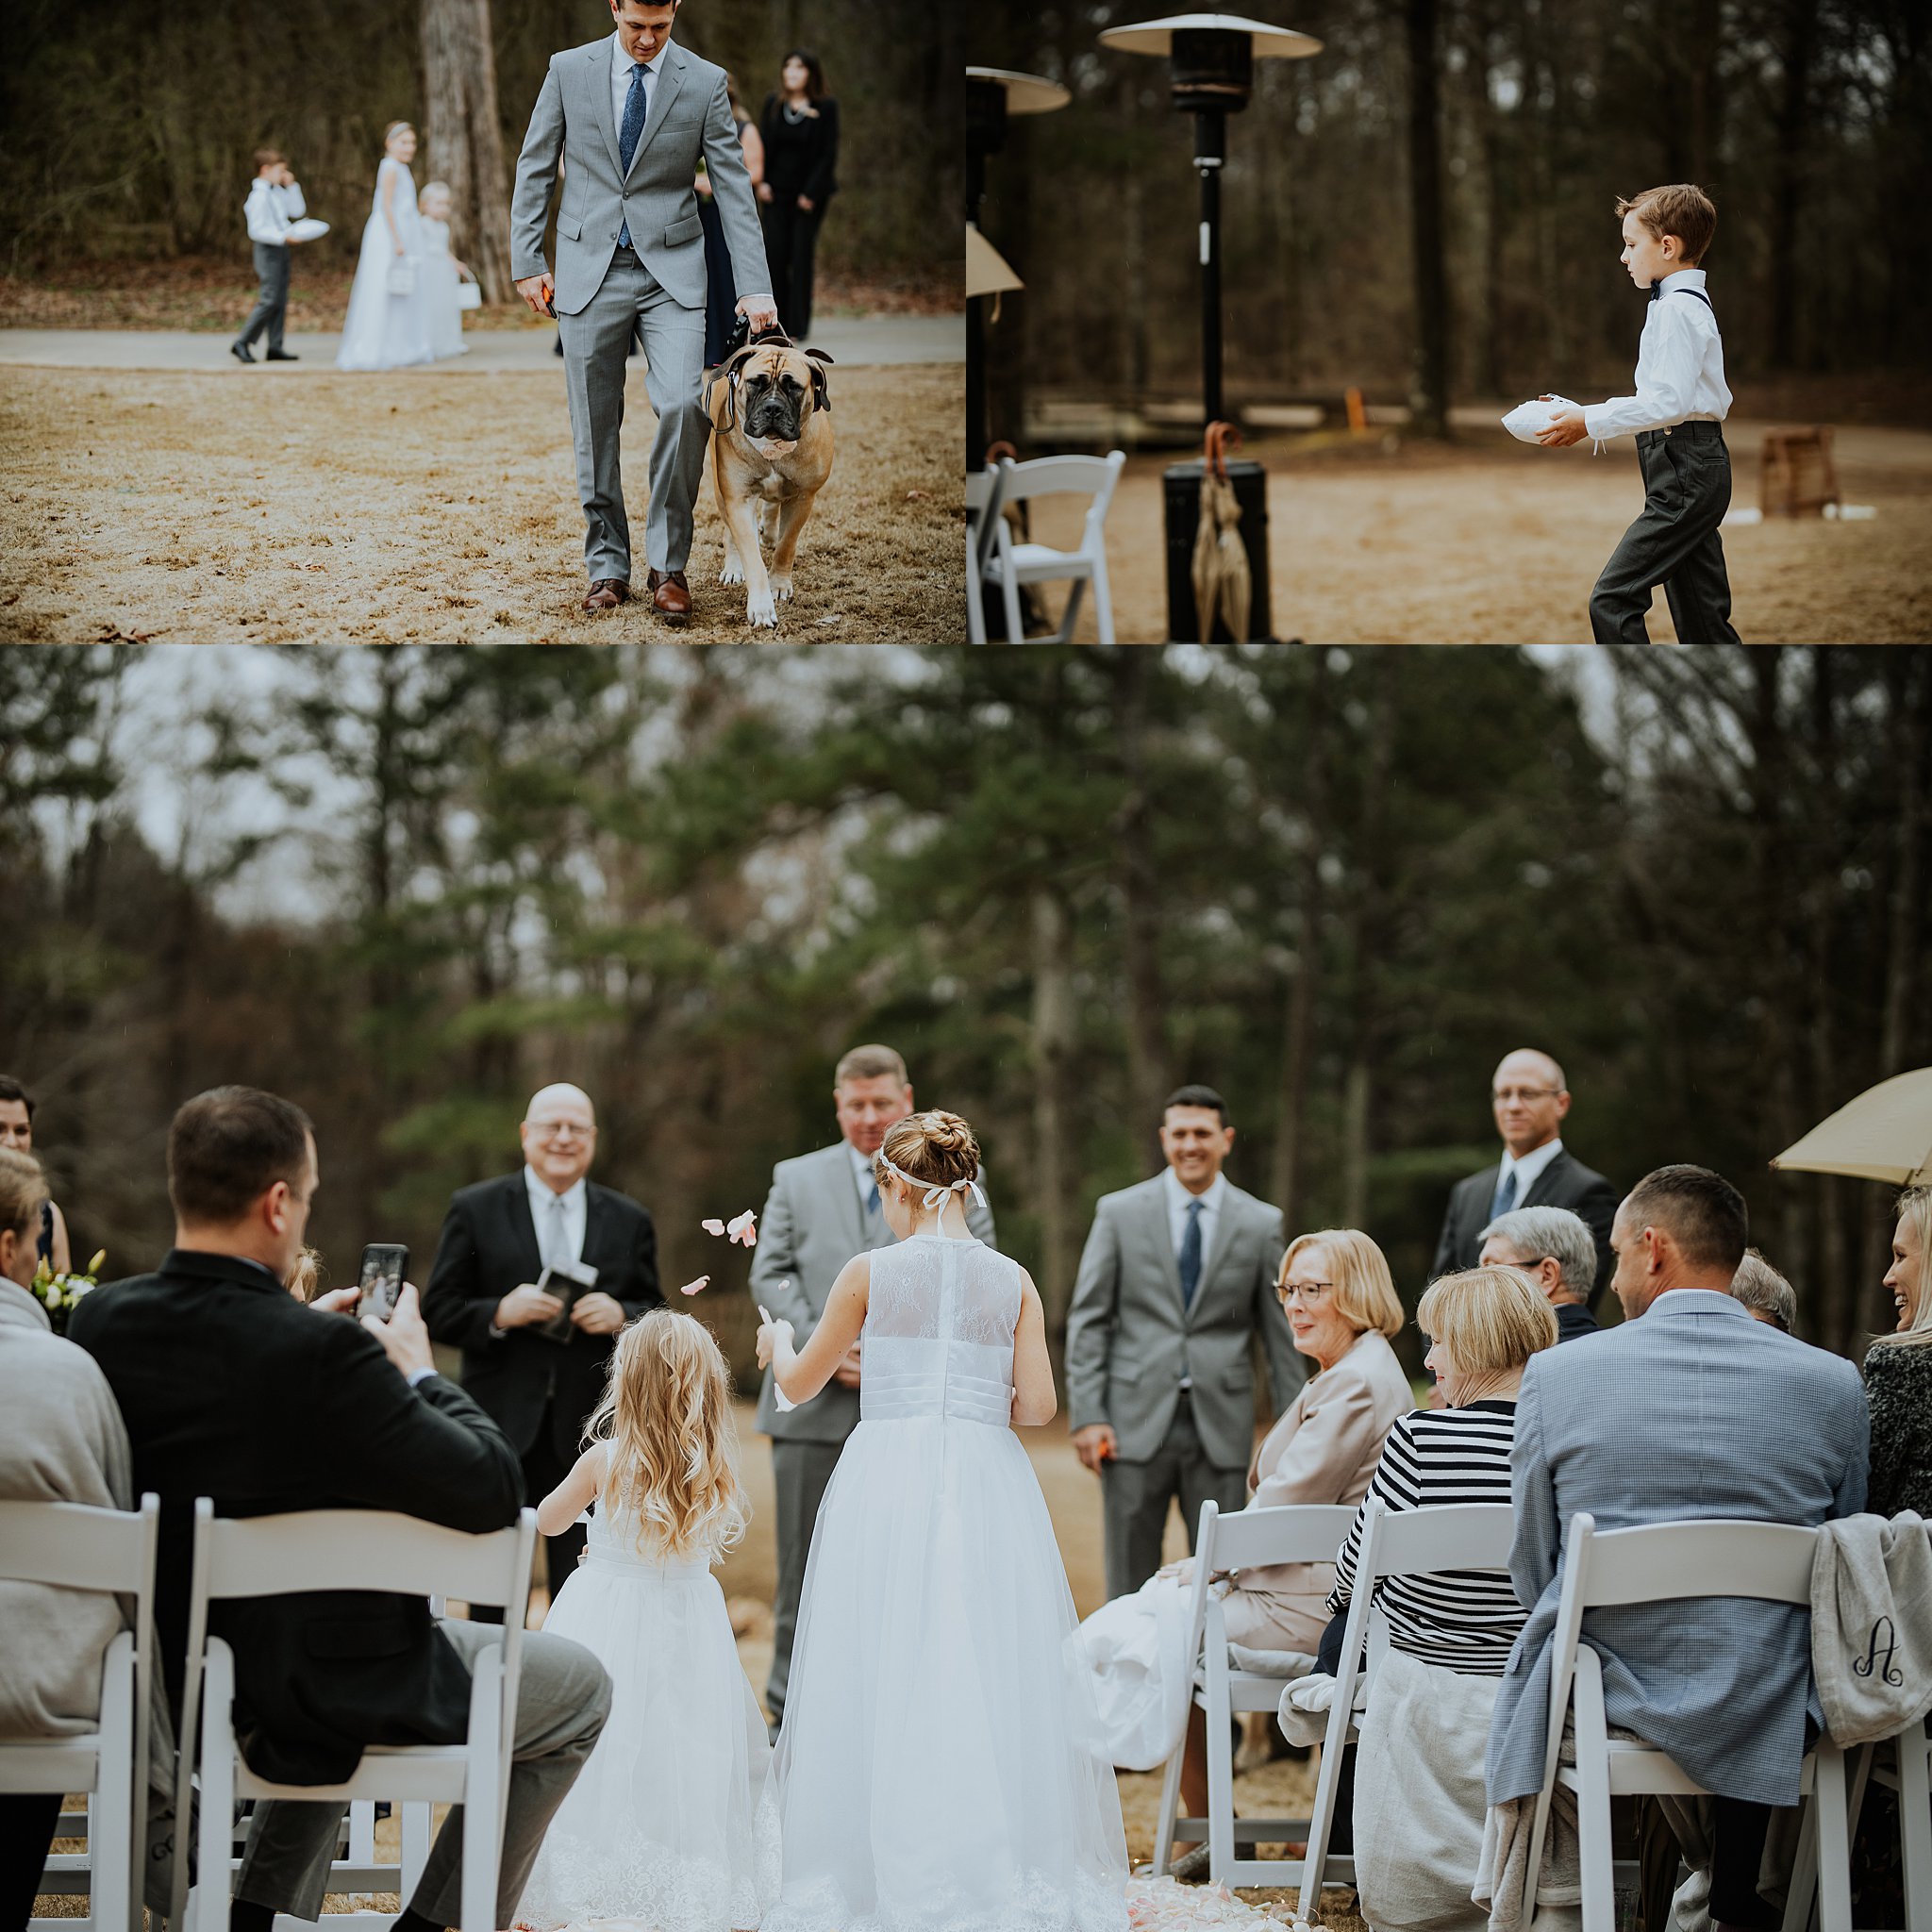 Barnesly Gardens Wedding Top Atlanta Photographers